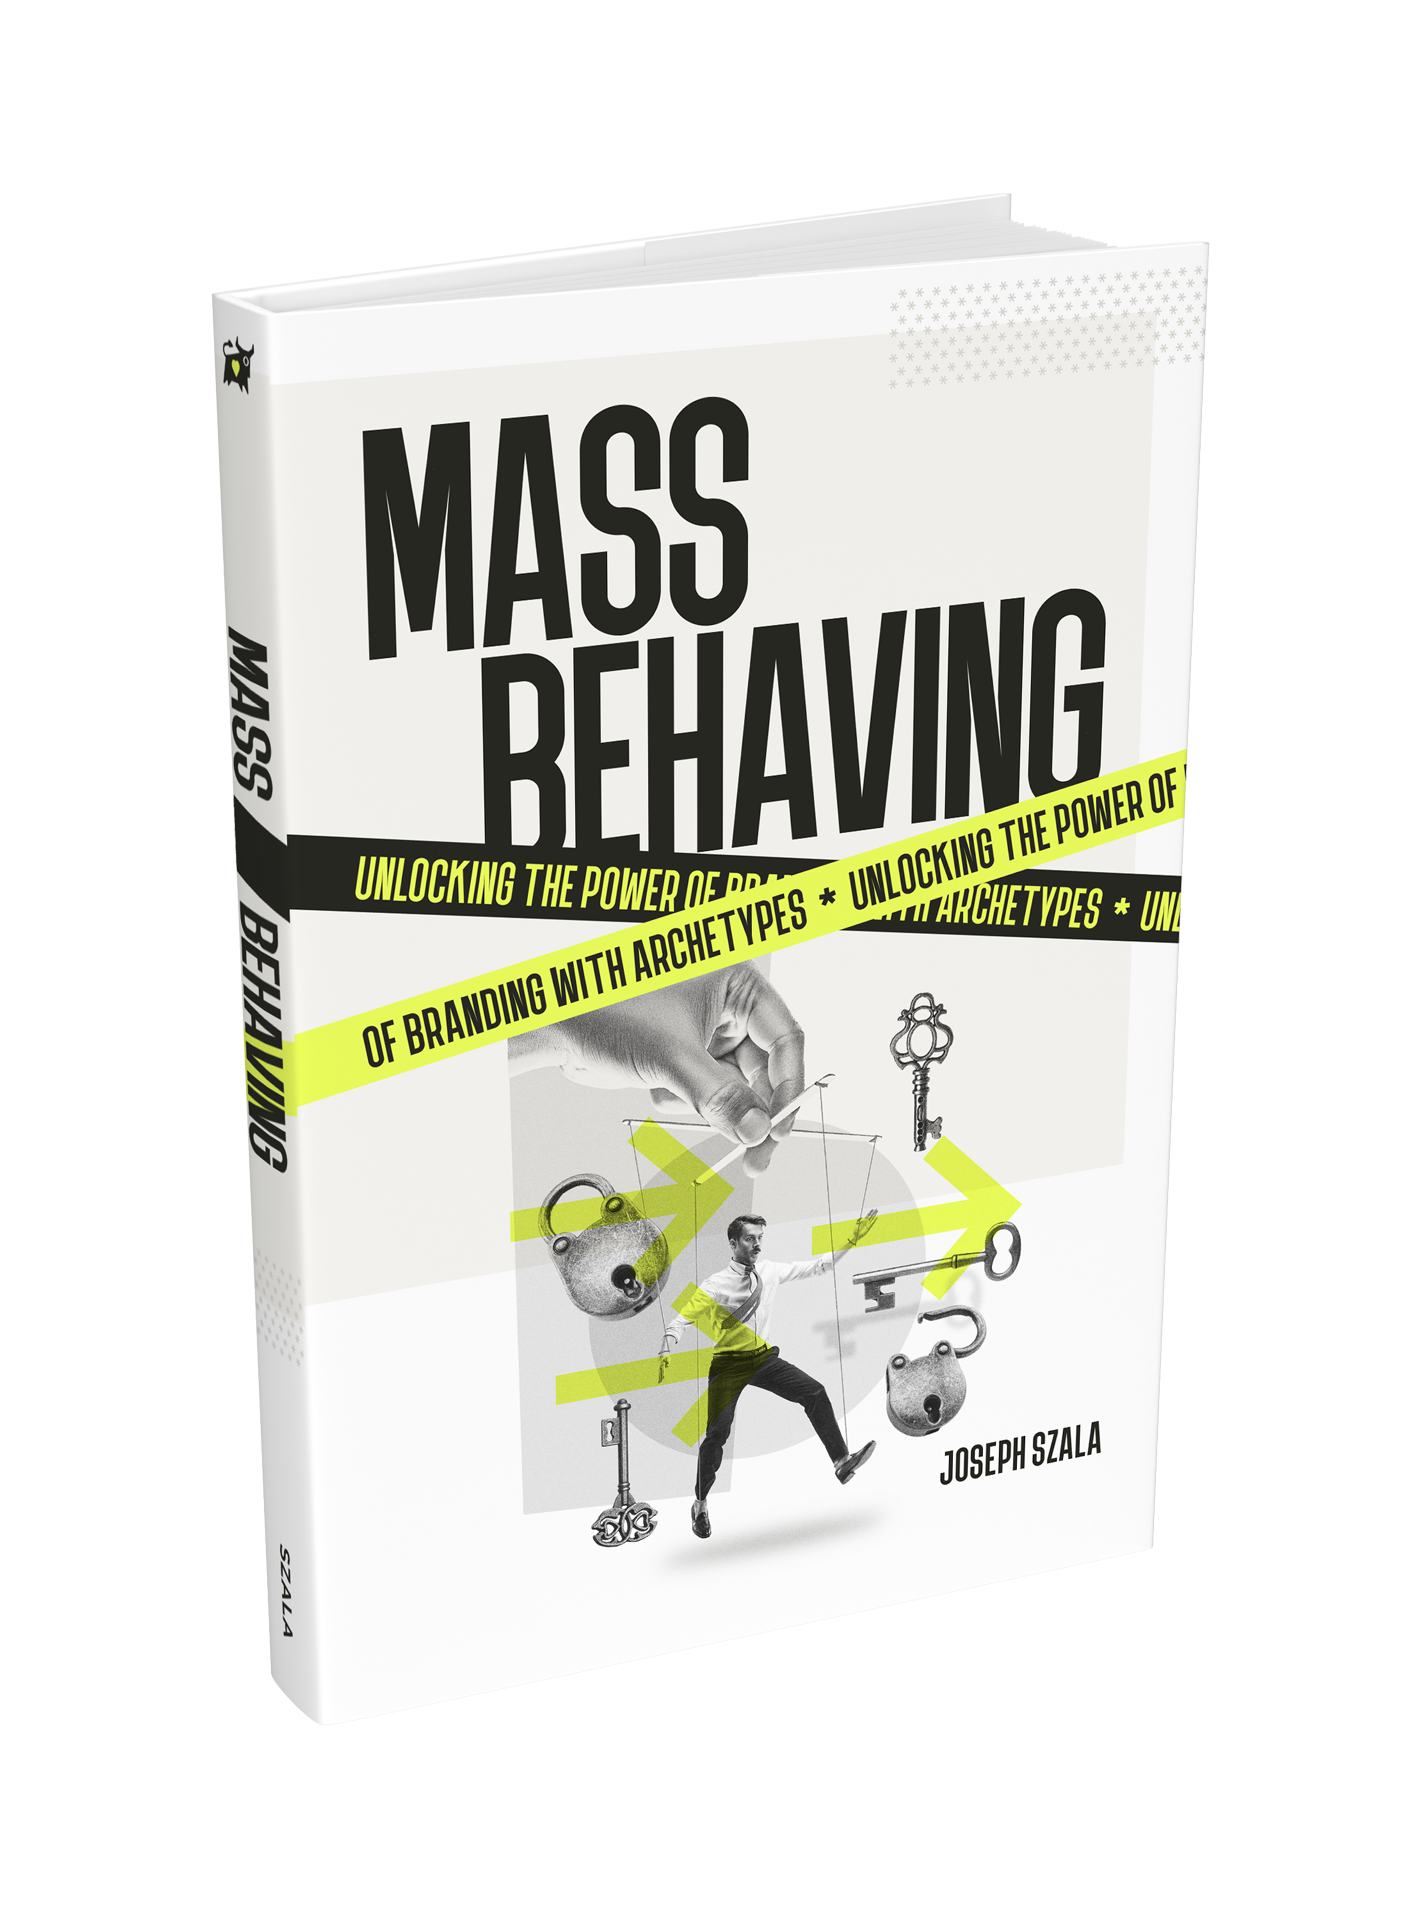 Mass Behaving - book on branding with archetypes